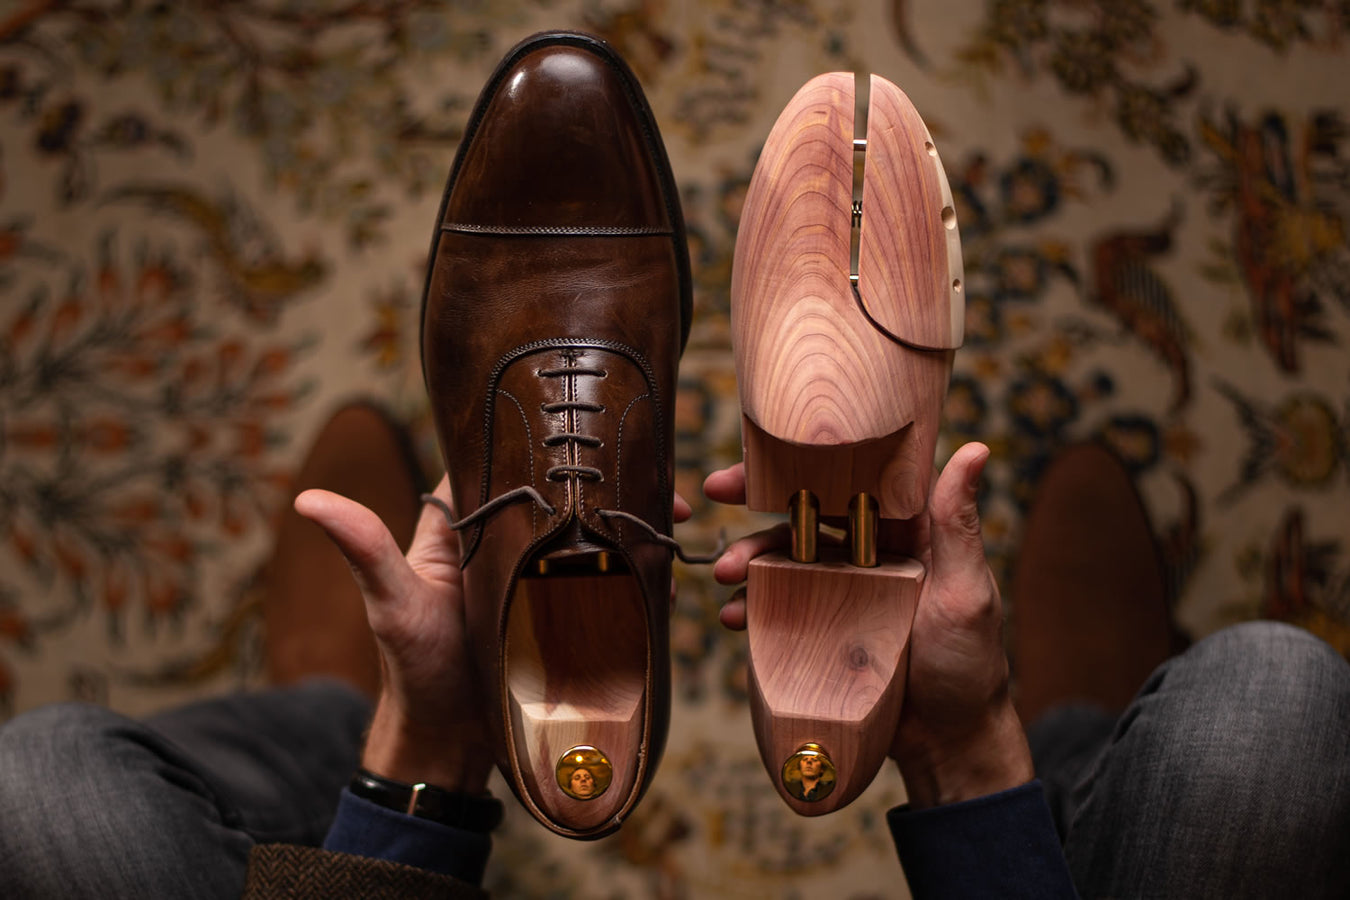 Cedar shoe trees in leather shoes